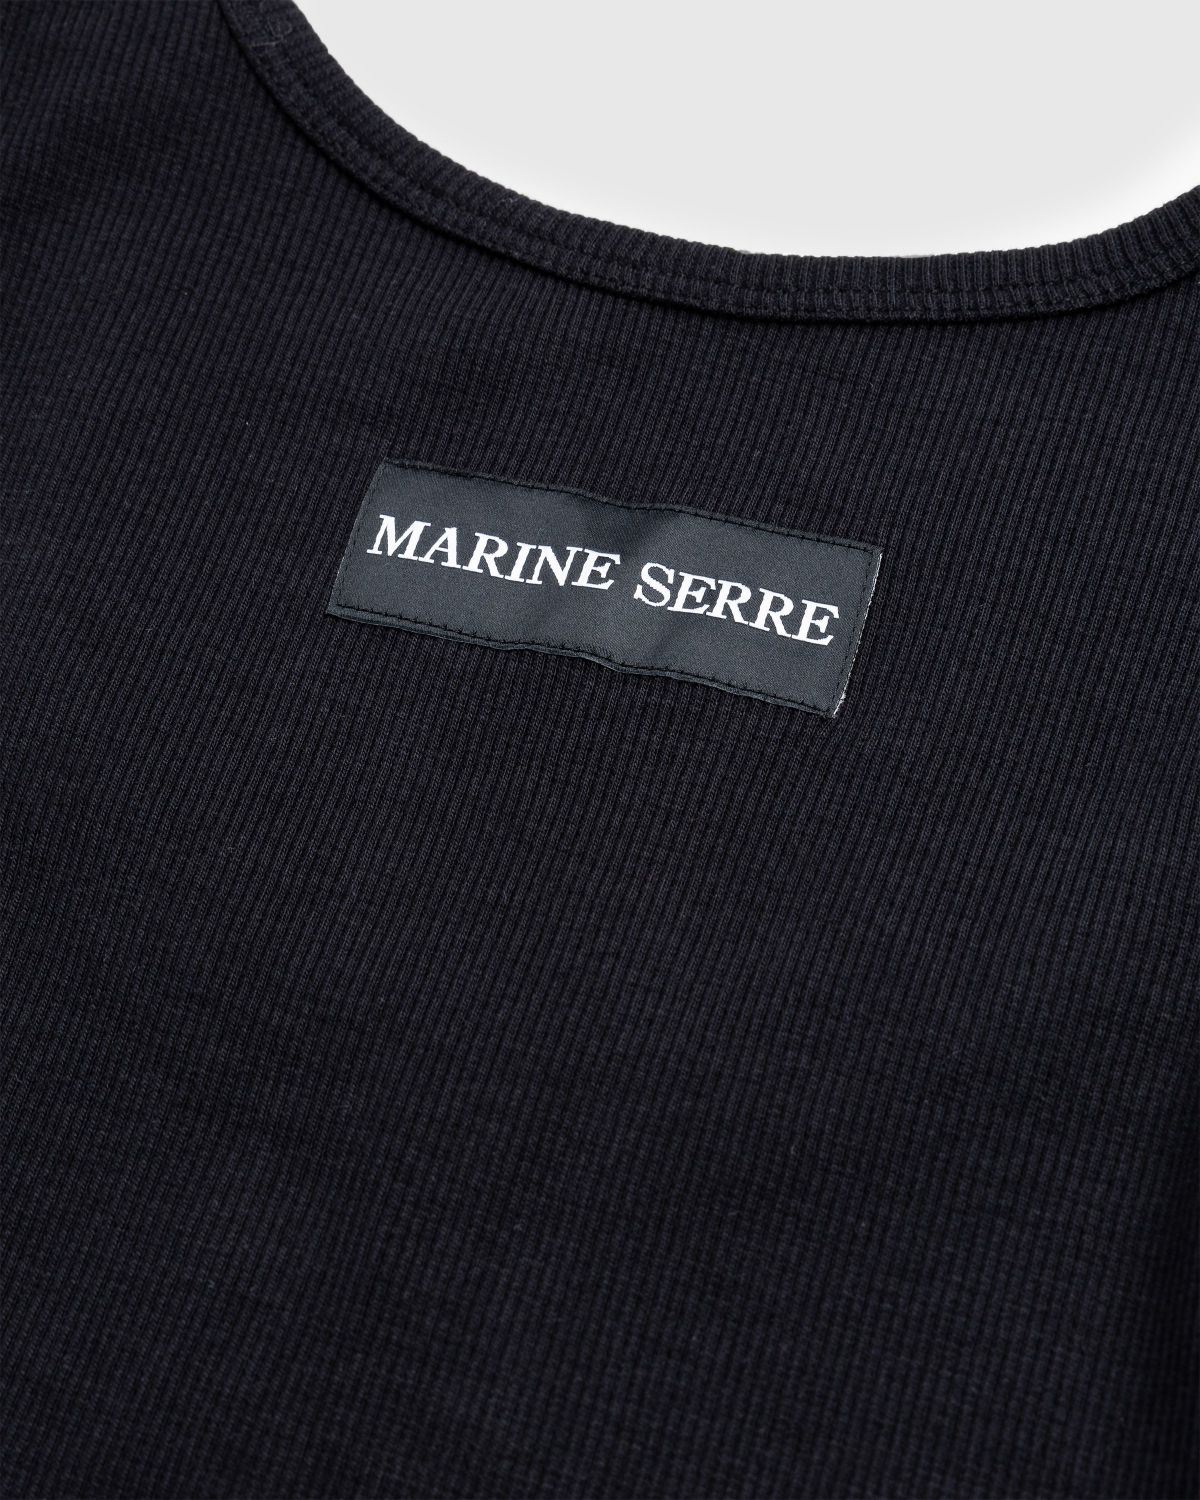 Marine Serre – Organic Cotton Rib Tank Top Black - Tops - Black - Image 5